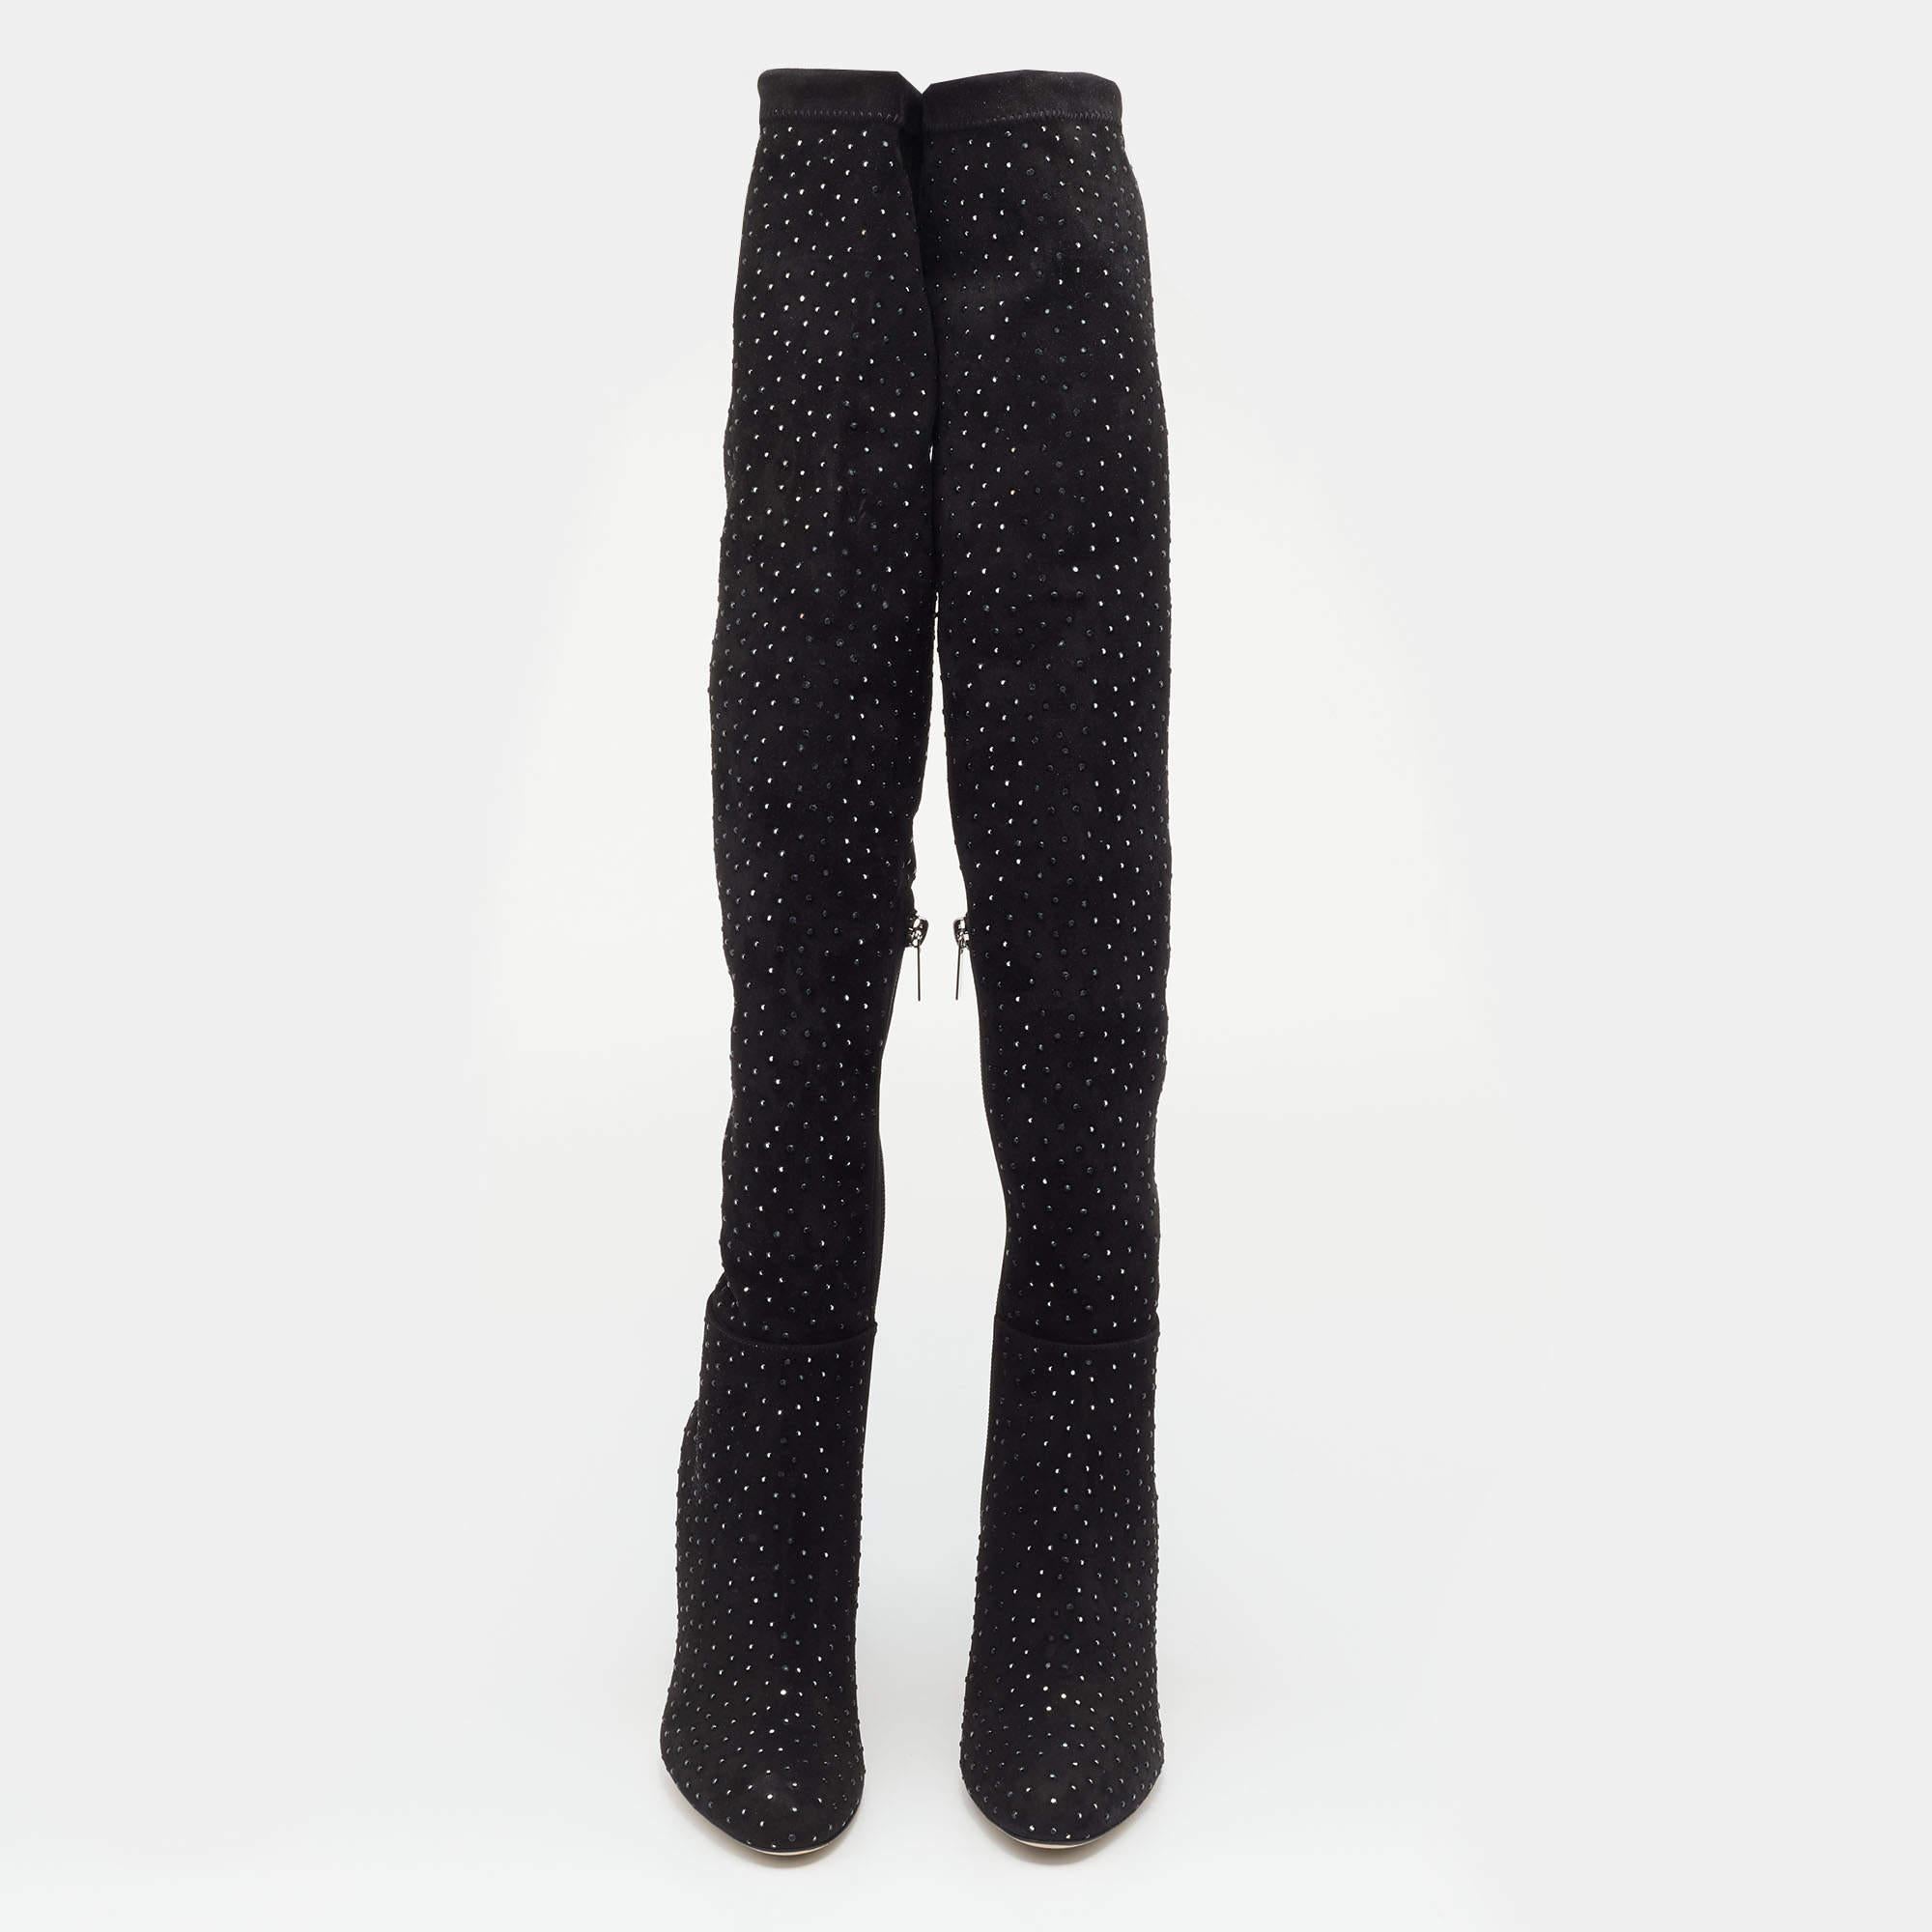 Jimmy Choo Black Stretch Fabric Toni Crystal Embellished Thigh High Boots Size 3 4